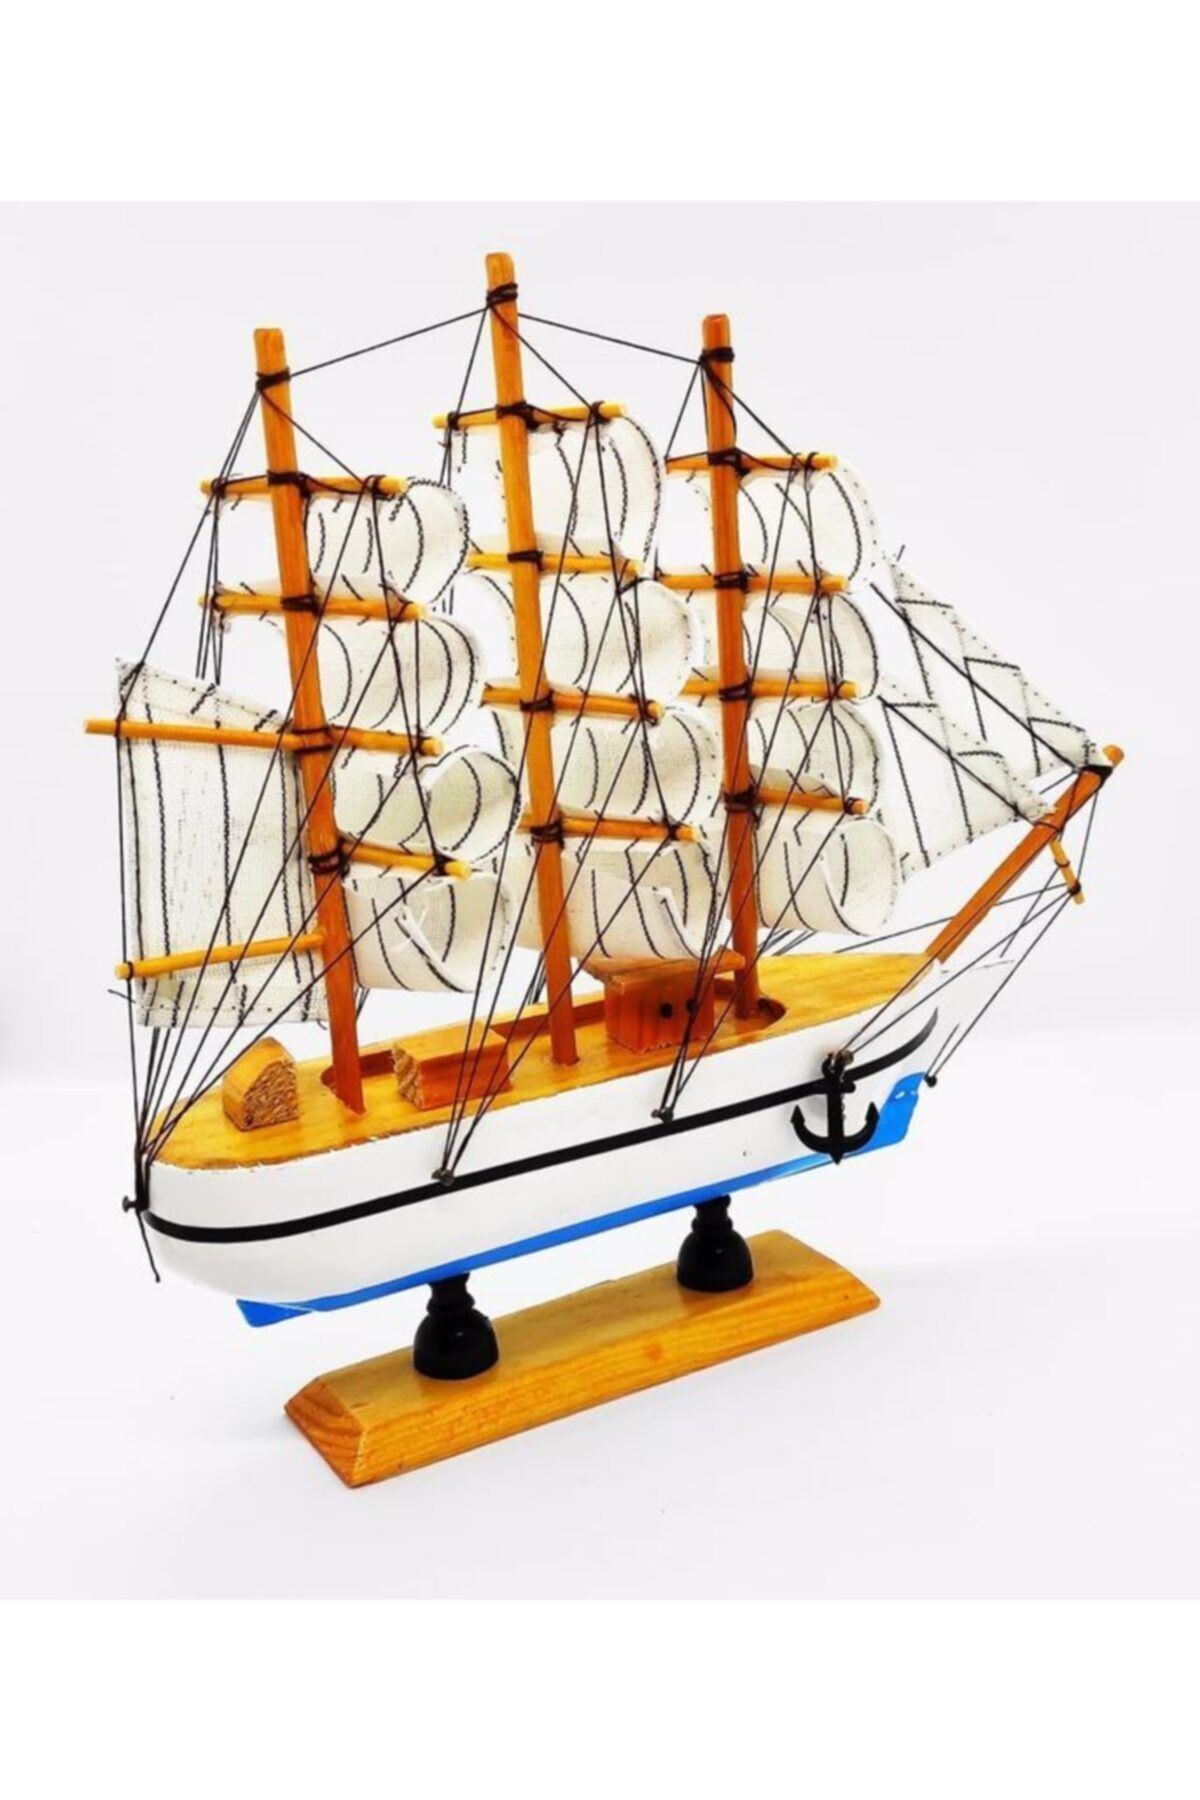 ÖZAY HOME El Yapımı Özel Yelkenli Gemi - Da Cheng Crafts Firm 24x22cm